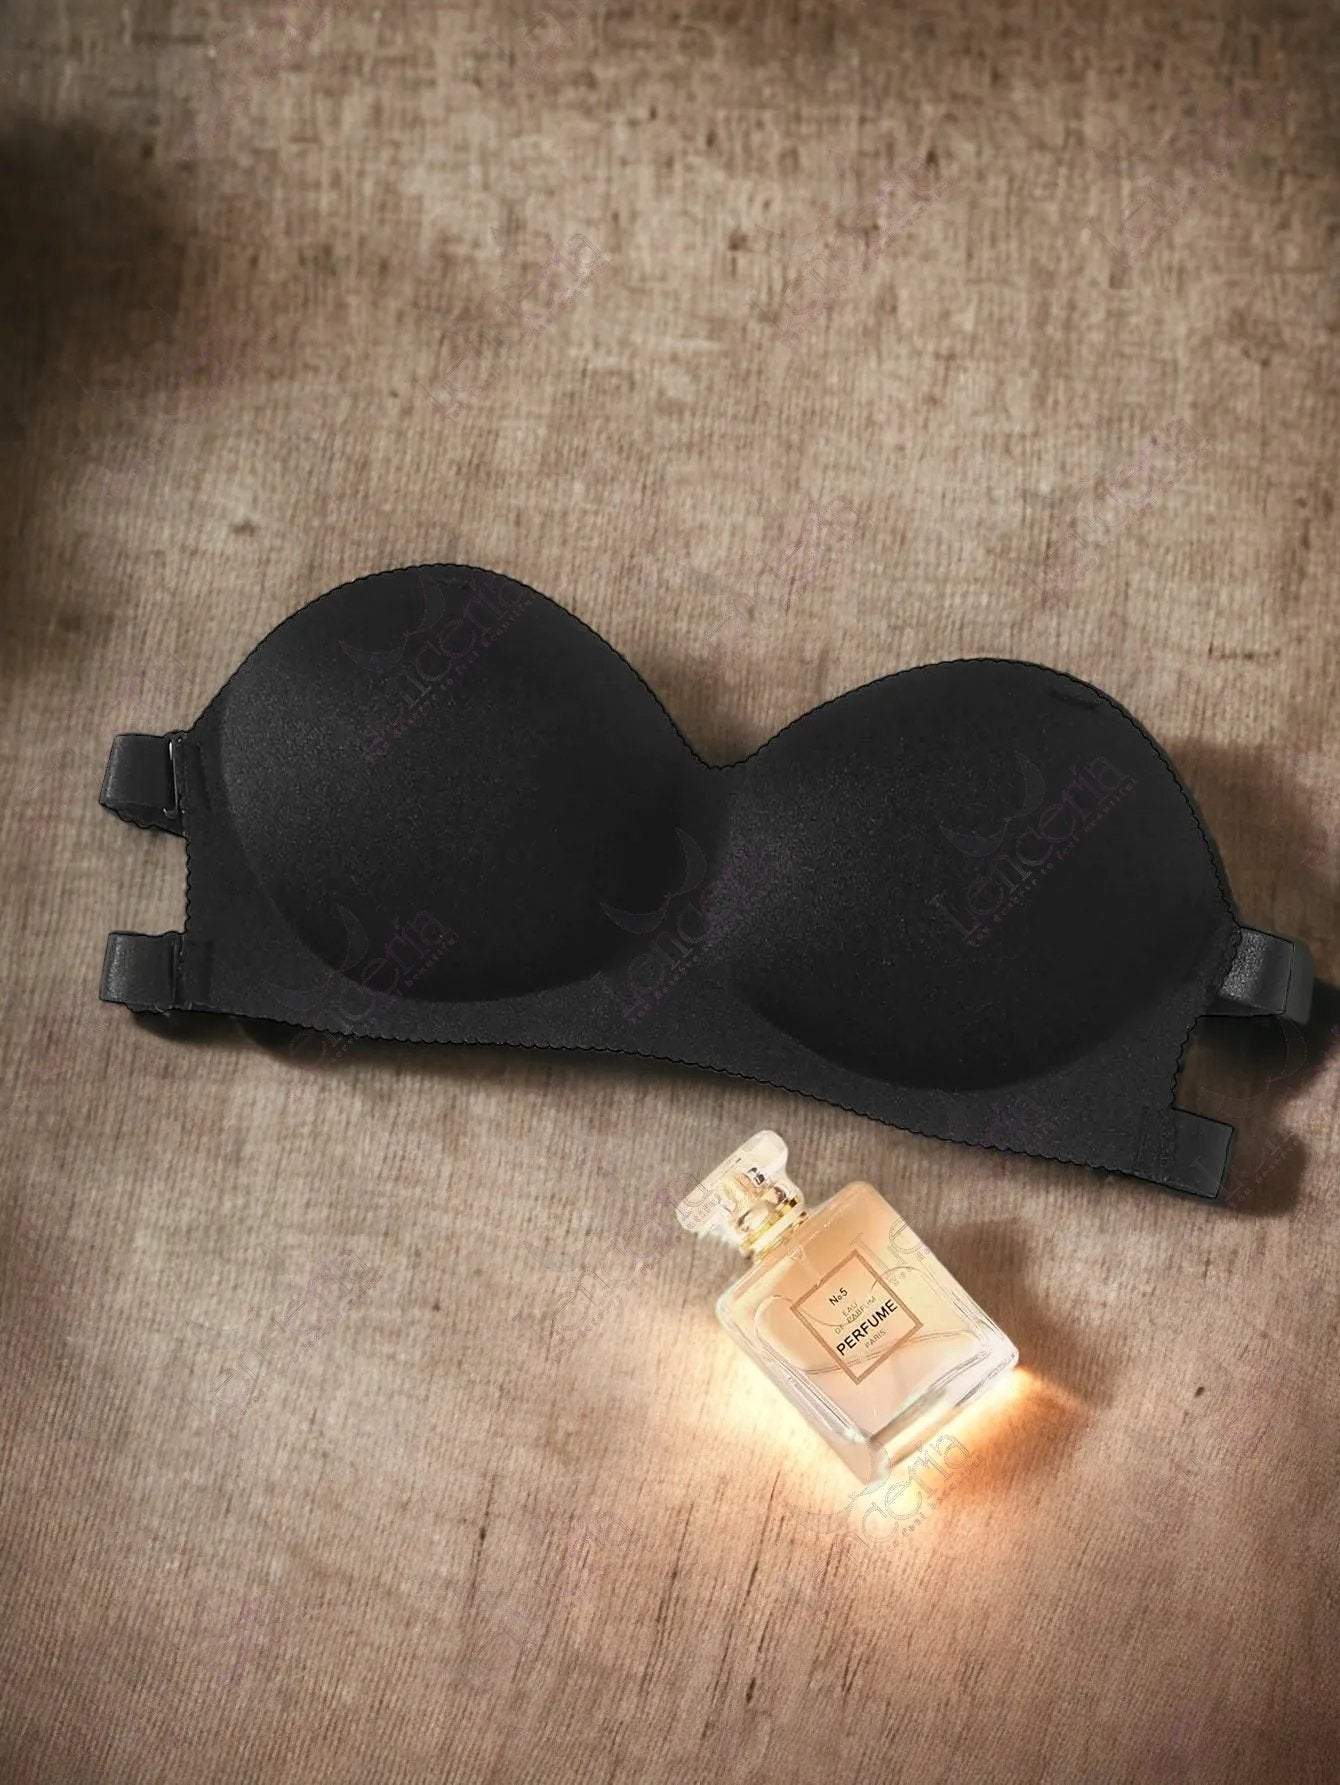 Cheriee everyday essentials Noir lightly padded pushup bra - very